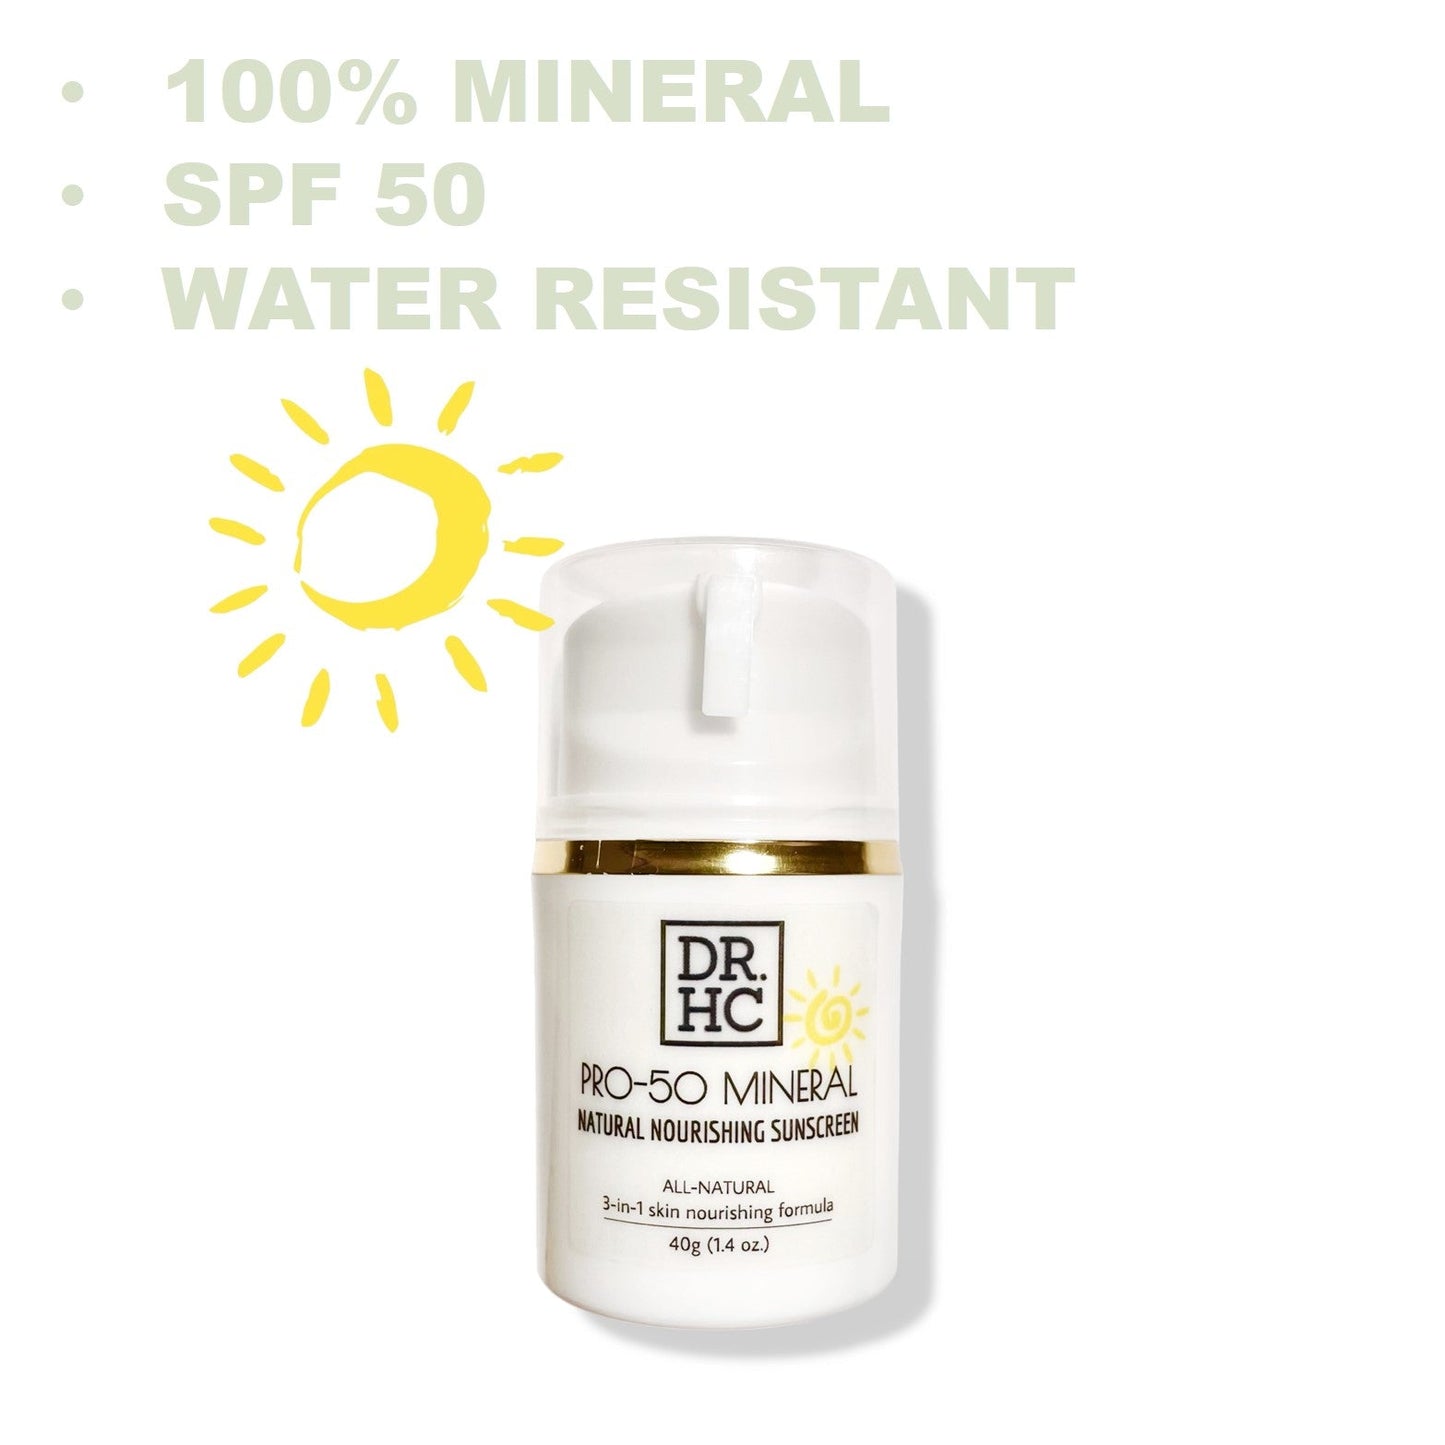 DR.HC Pro-50 Mineral Natural Nourishing Sunscreen (40g, 1.4oz.) (Natural UV Care, Skin brightening, Anti-aging, Damage Repair, Anti-inflammatory...)-6